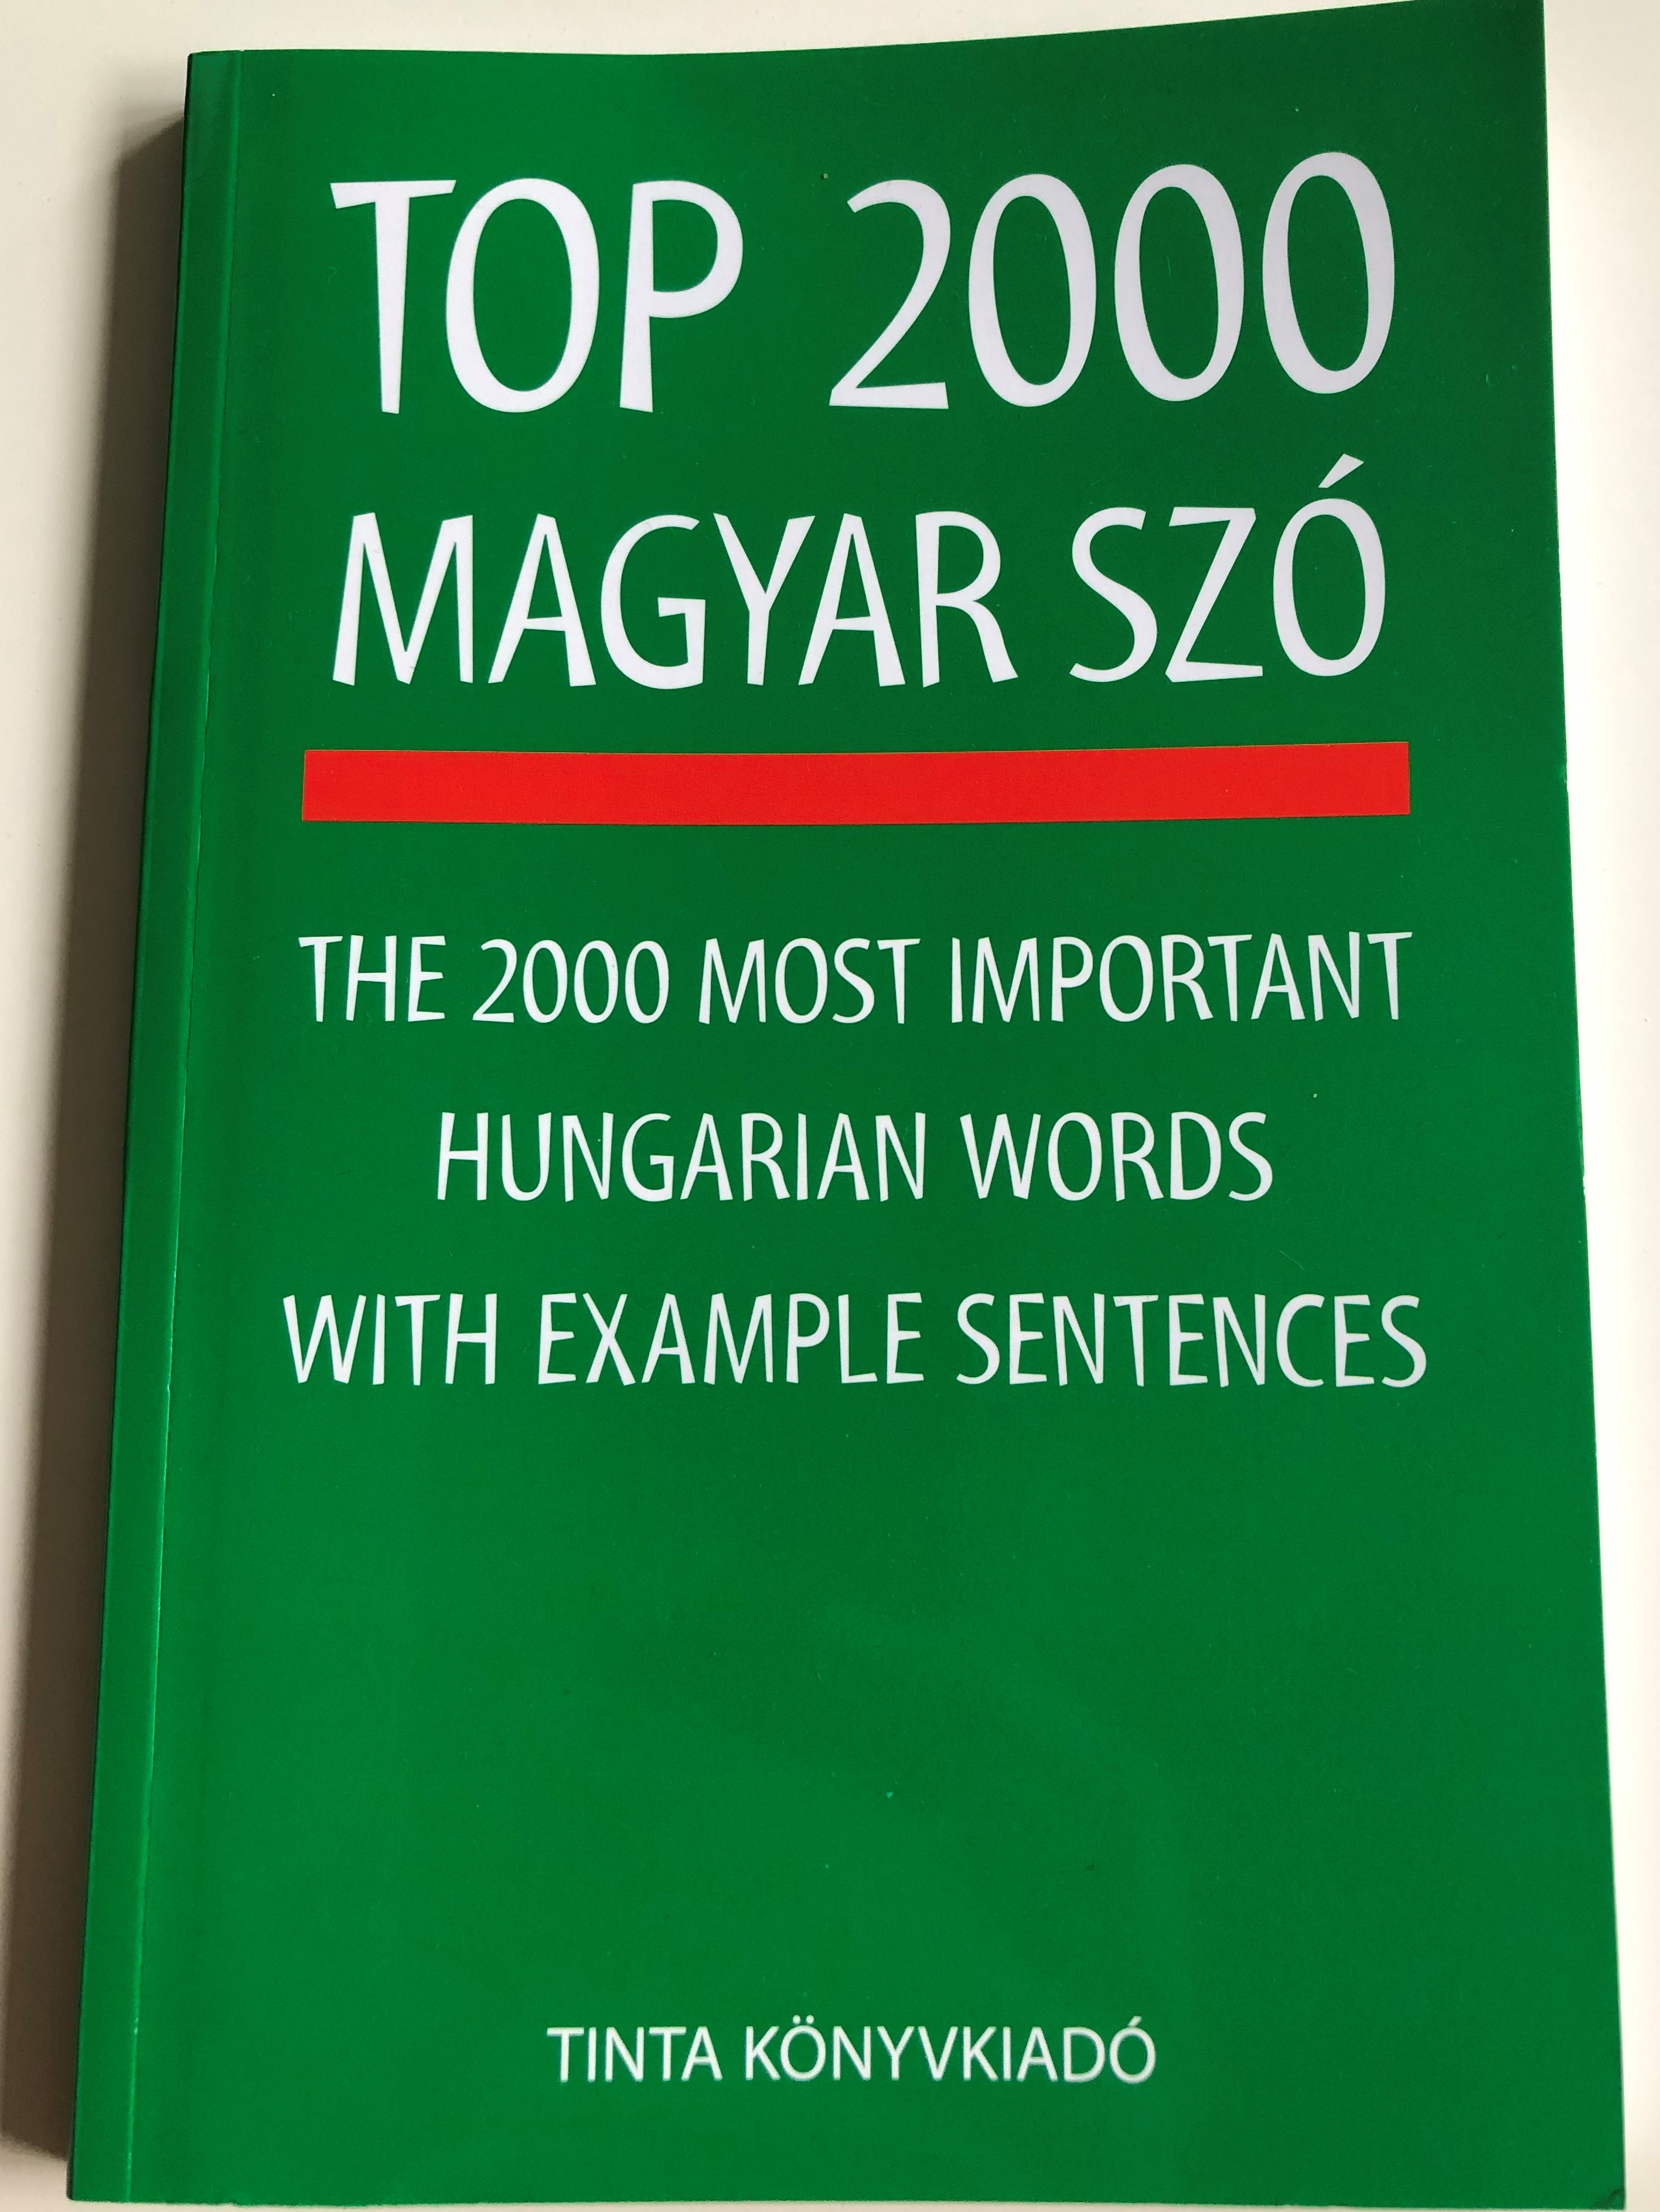 top-2000-magyar-sz-by-kiss-zsuzsanna-the-2000-most-important-hungarian-words-with-example-sentences-tinta-k-nyvkiad-2017-series-editor-viola-temesi-1-.jpg